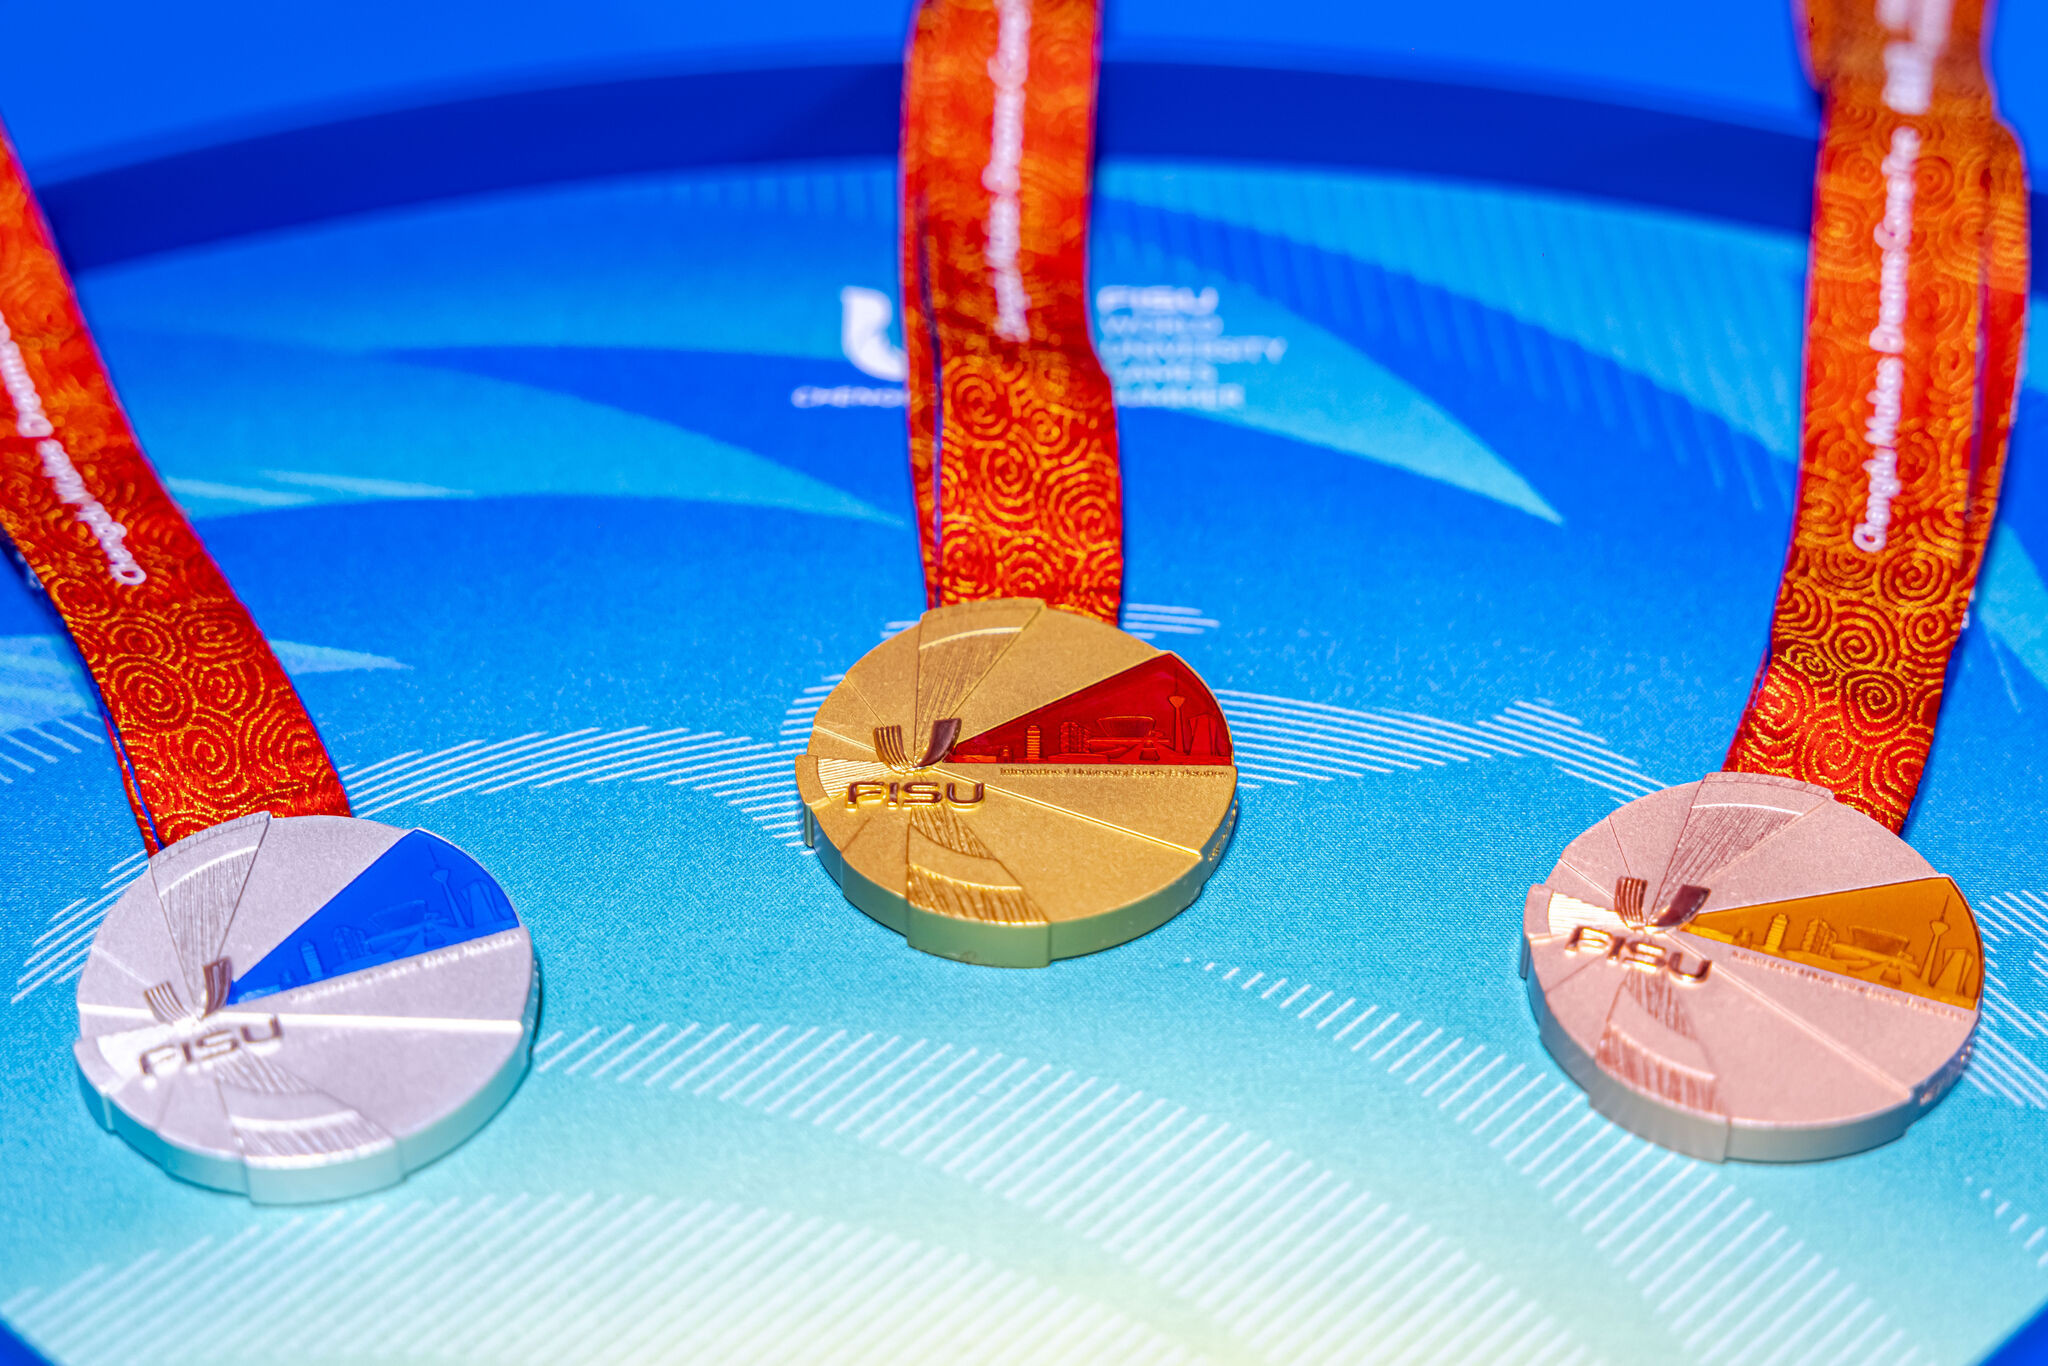 Chengdu 2021 FISU World University Games medals named "Rongguang"